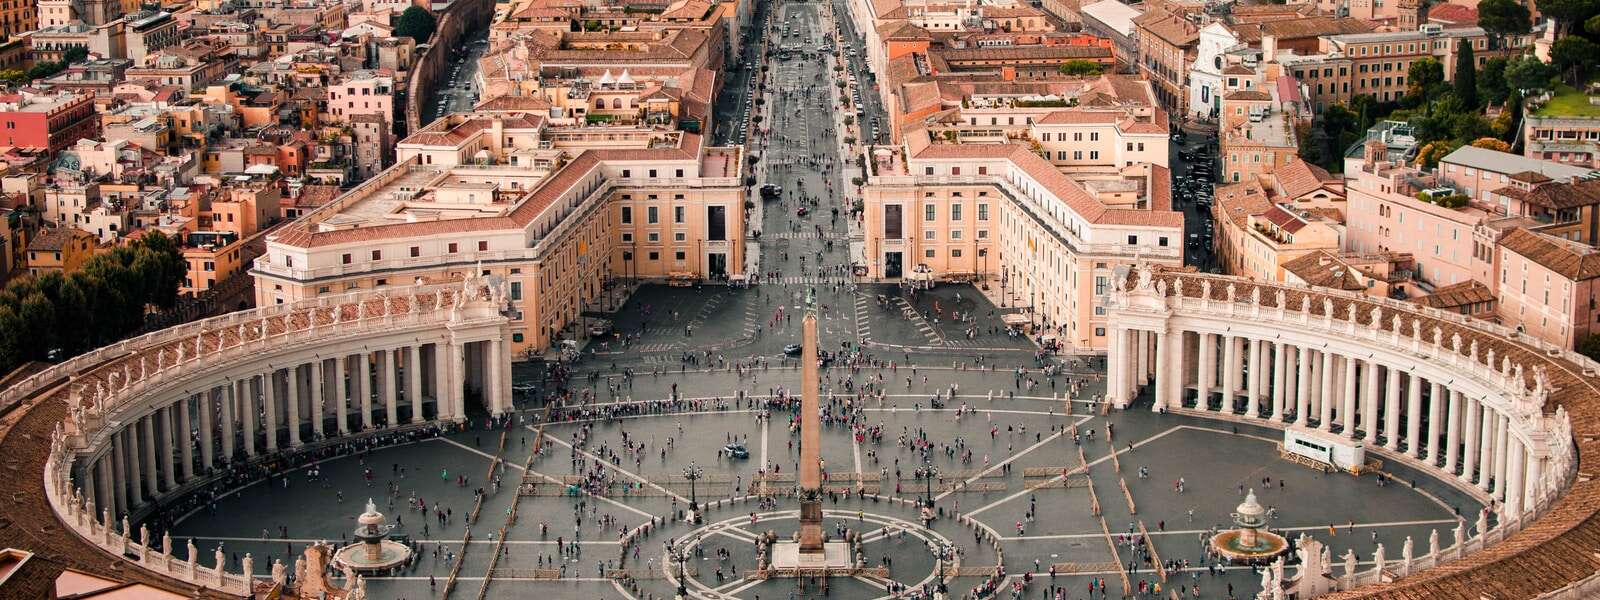 Piazza San Pietro, Vatican City.